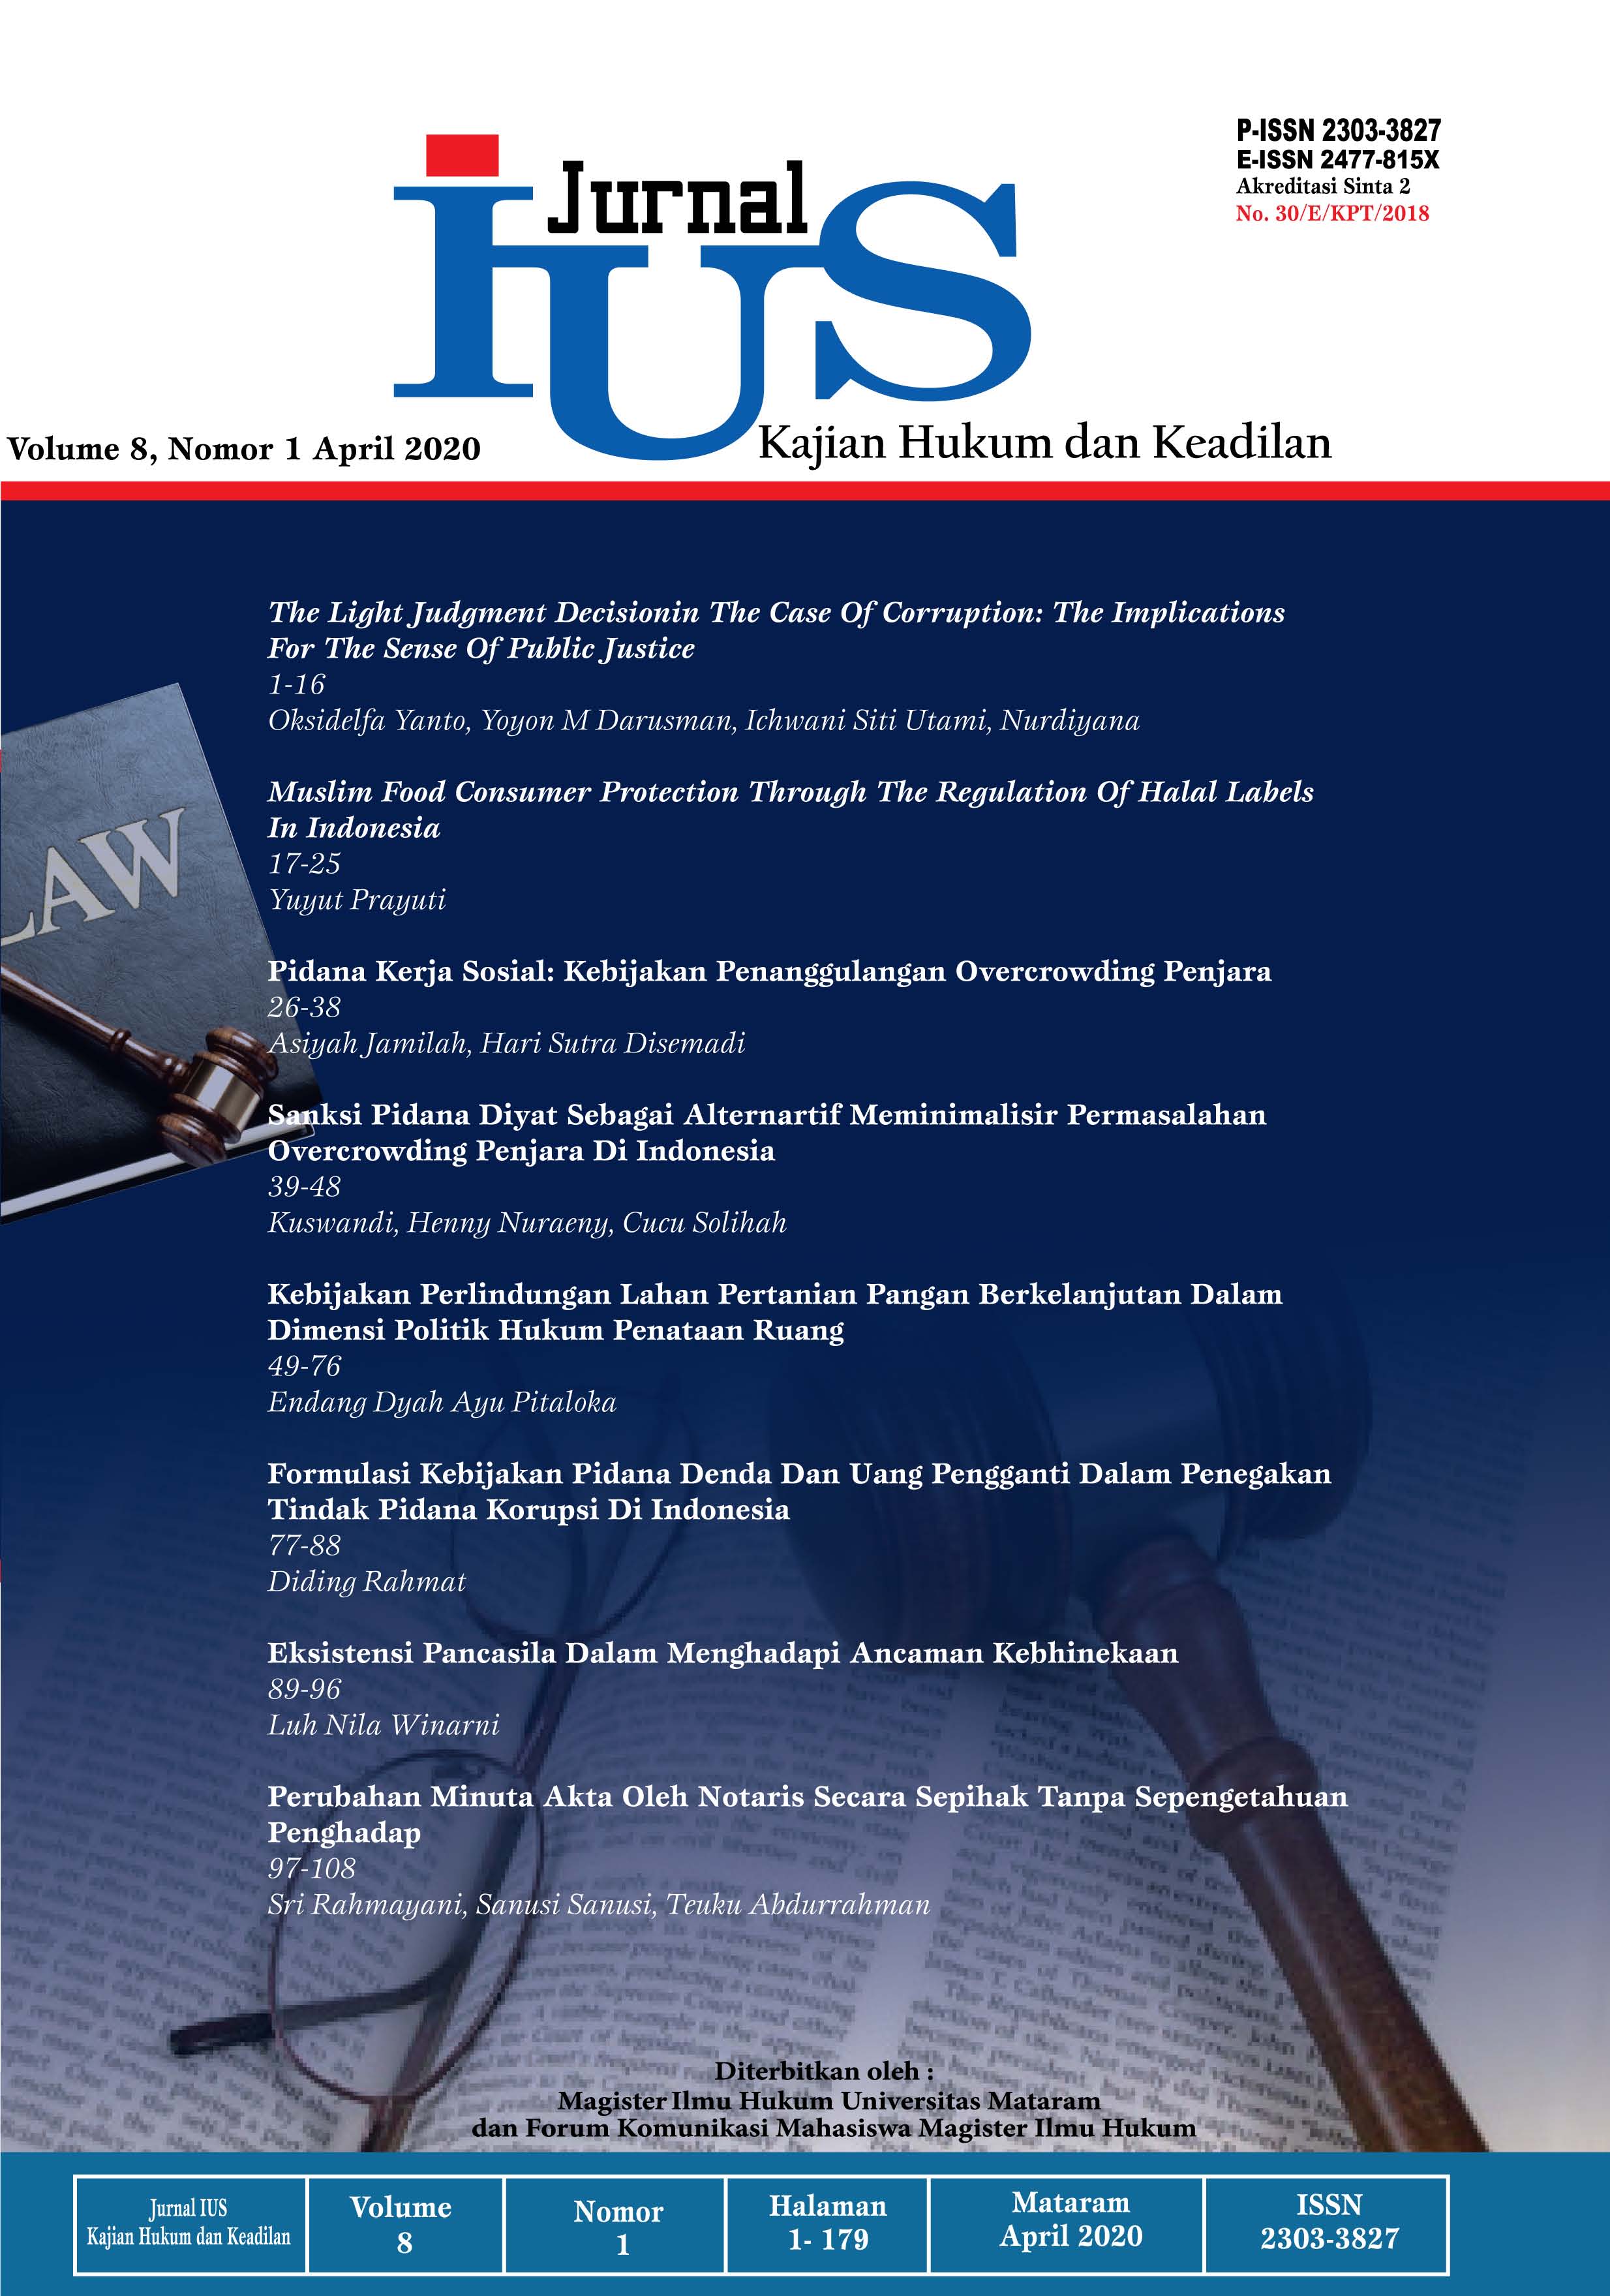 					View Vol. 8 No. 1: April 2020 : Jurnal IUS Kajian Hukum dan Keadilan
				